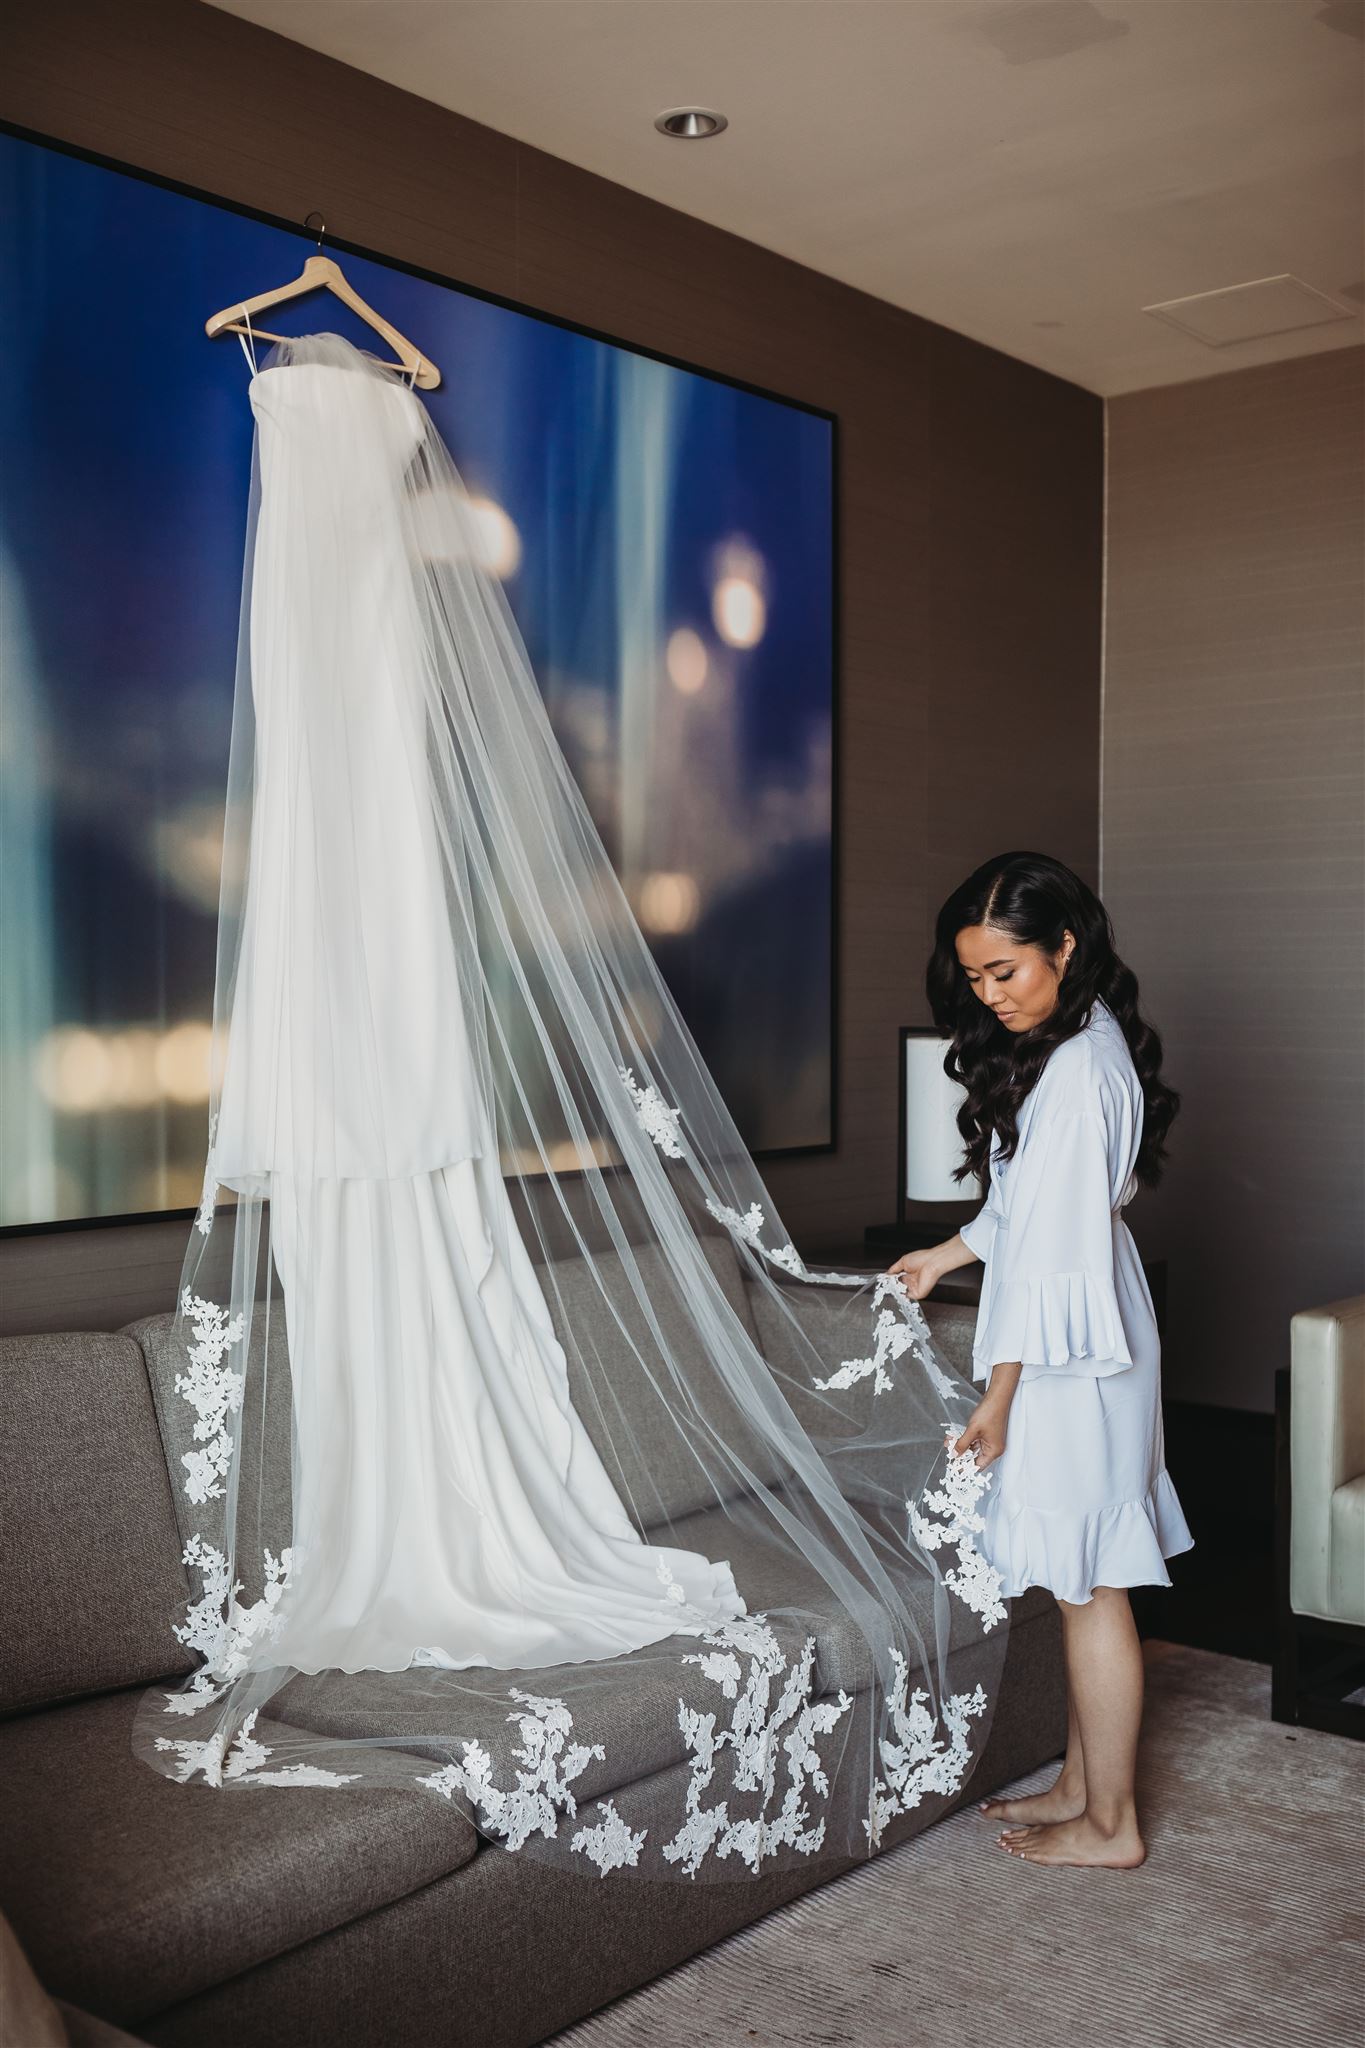 Tips For Choosing A Wedding Dress by Toronto wedding photographer Ten2Ten Photography